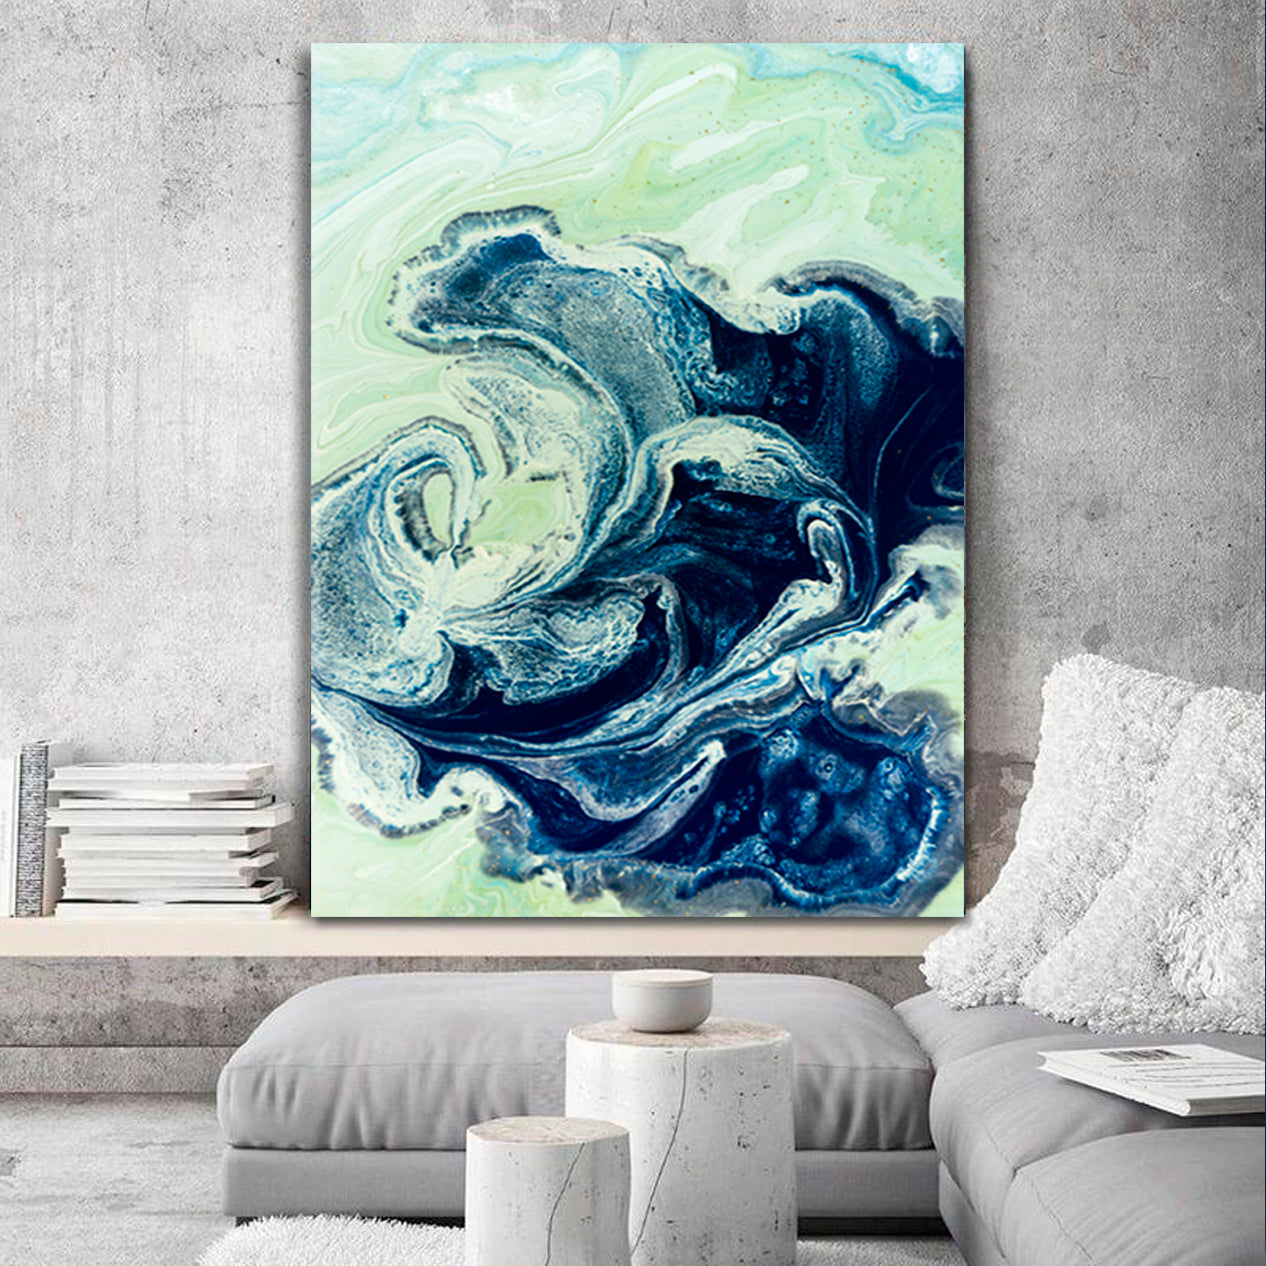 MARBLE Marbled Blue Green Abstract Liquid Pattern Fluid Oriental Style - Vertical Fluid Art, Oriental Marbling Canvas Print Artesty   